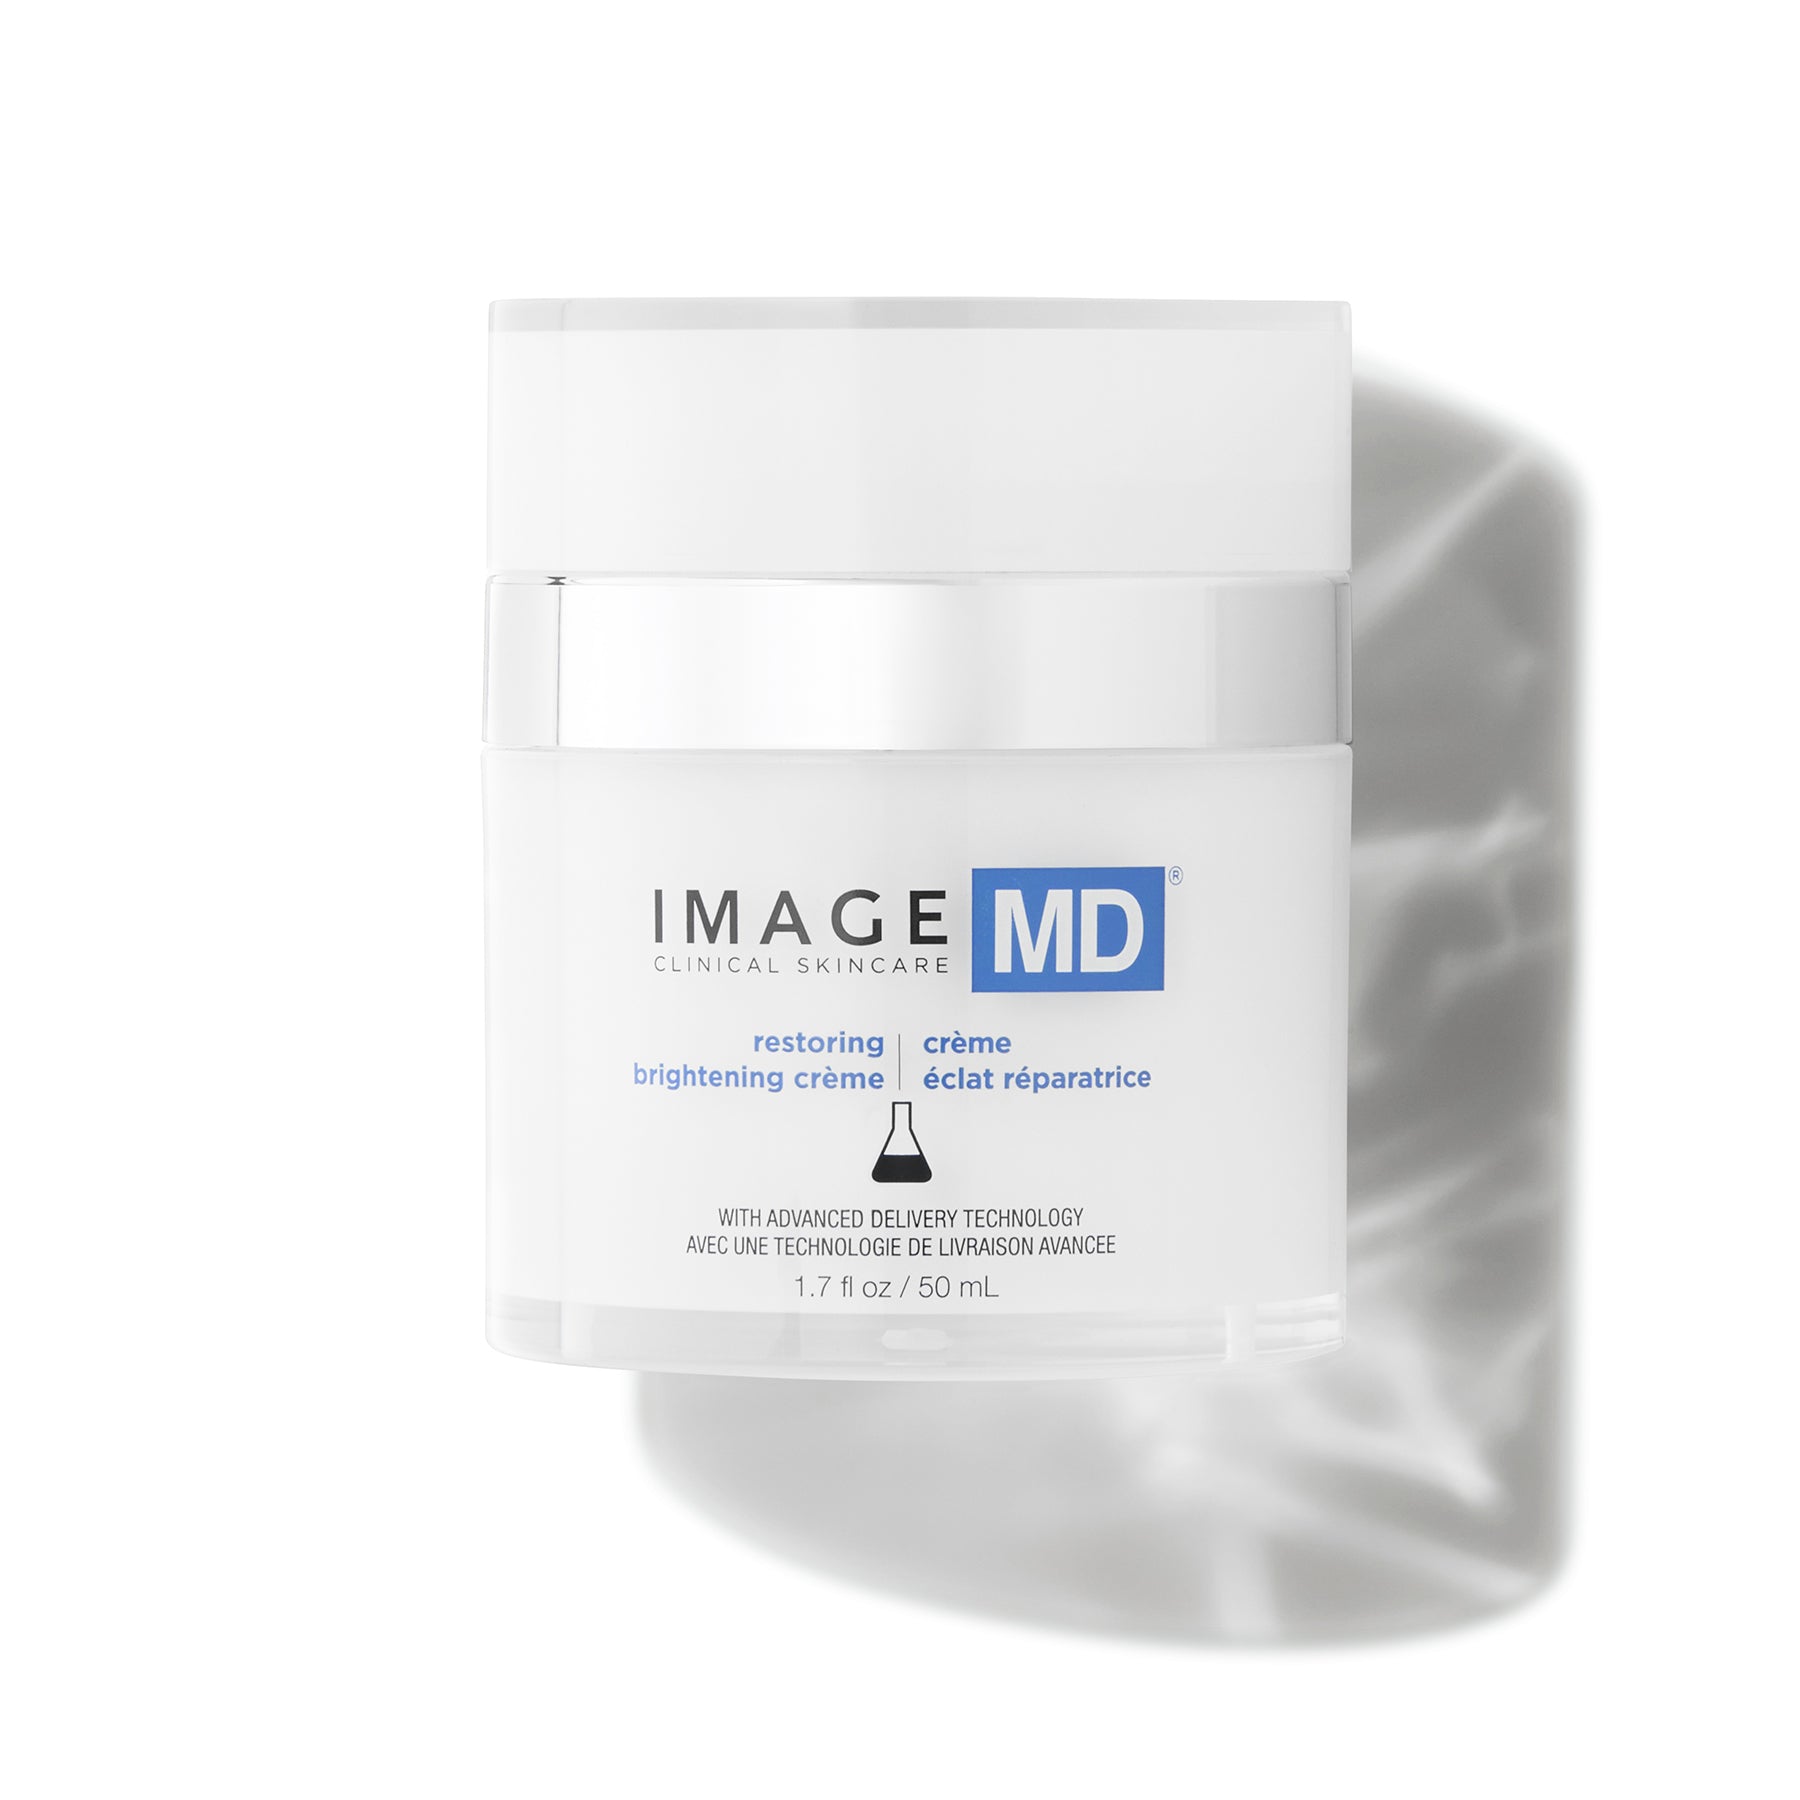 IMAGE MD® restoring brightening crème